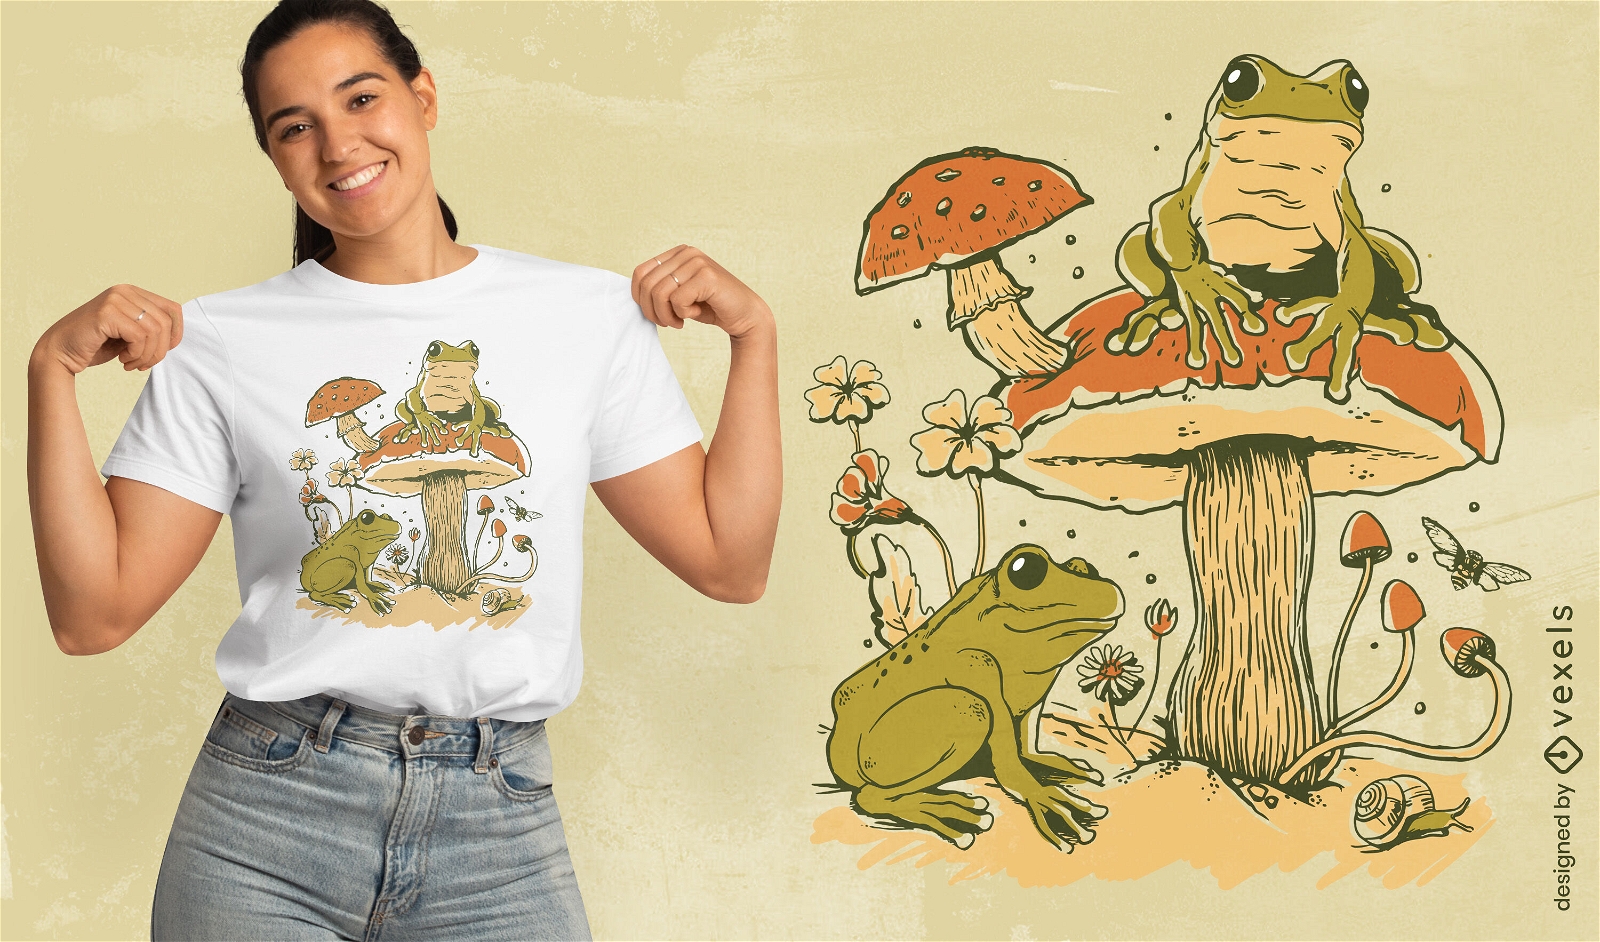 Dise?o de camiseta de naturaleza de ranas y hongos.